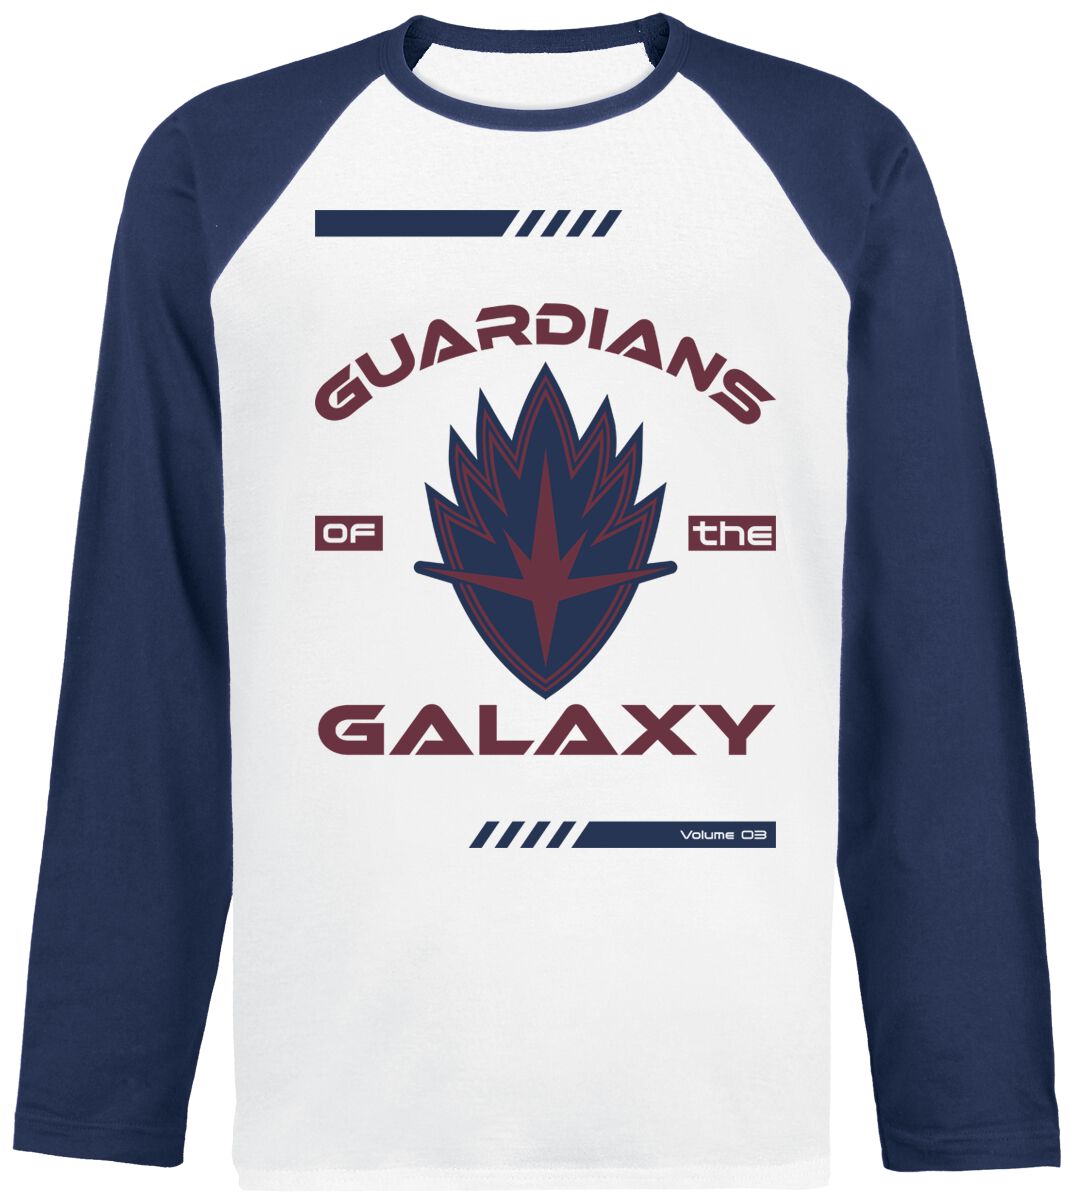 Guardians Of The Galaxy Vol. 3 - Badge Langarmshirt weiß navy in M von Guardians Of The Galaxy